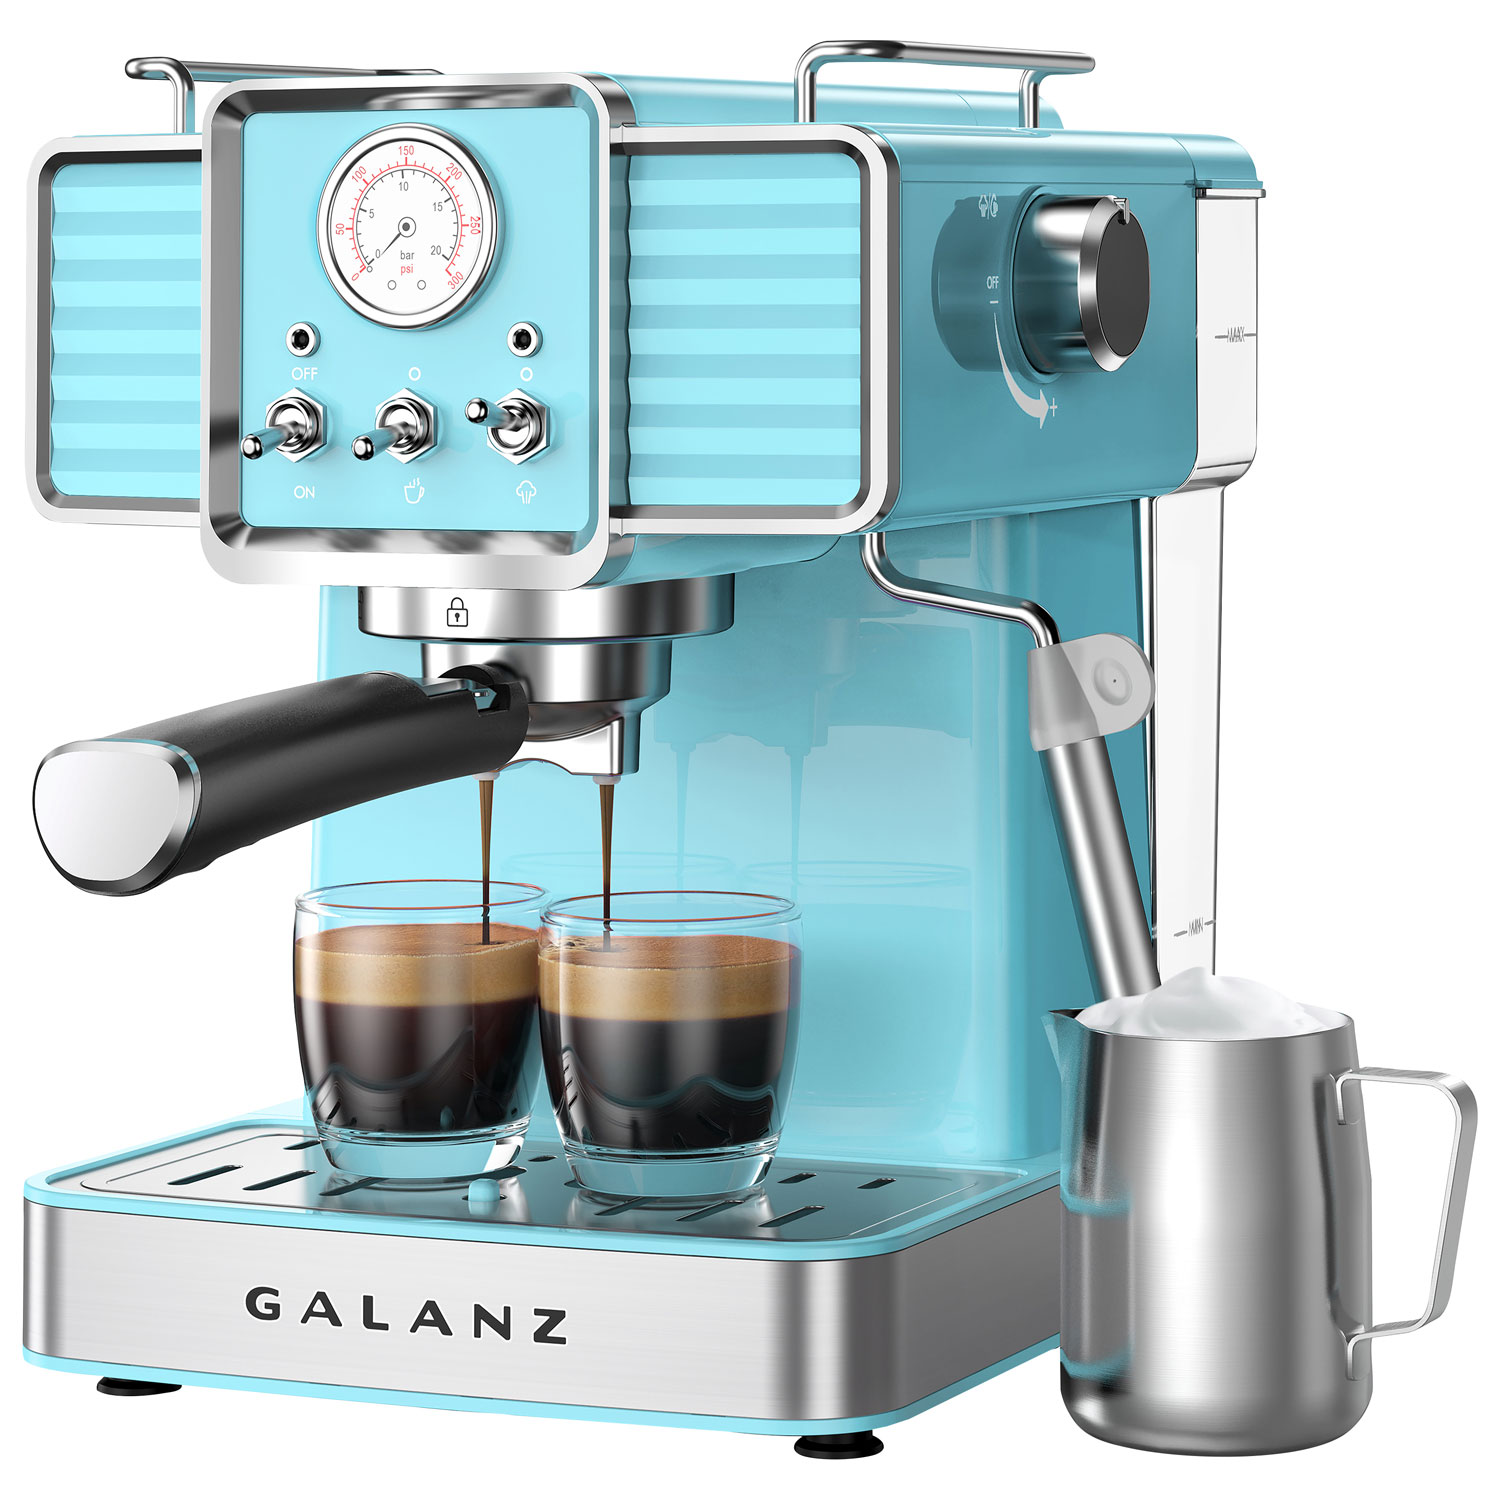 Galanz Retro Manual Espresso Machine with Milk Frother - Blue